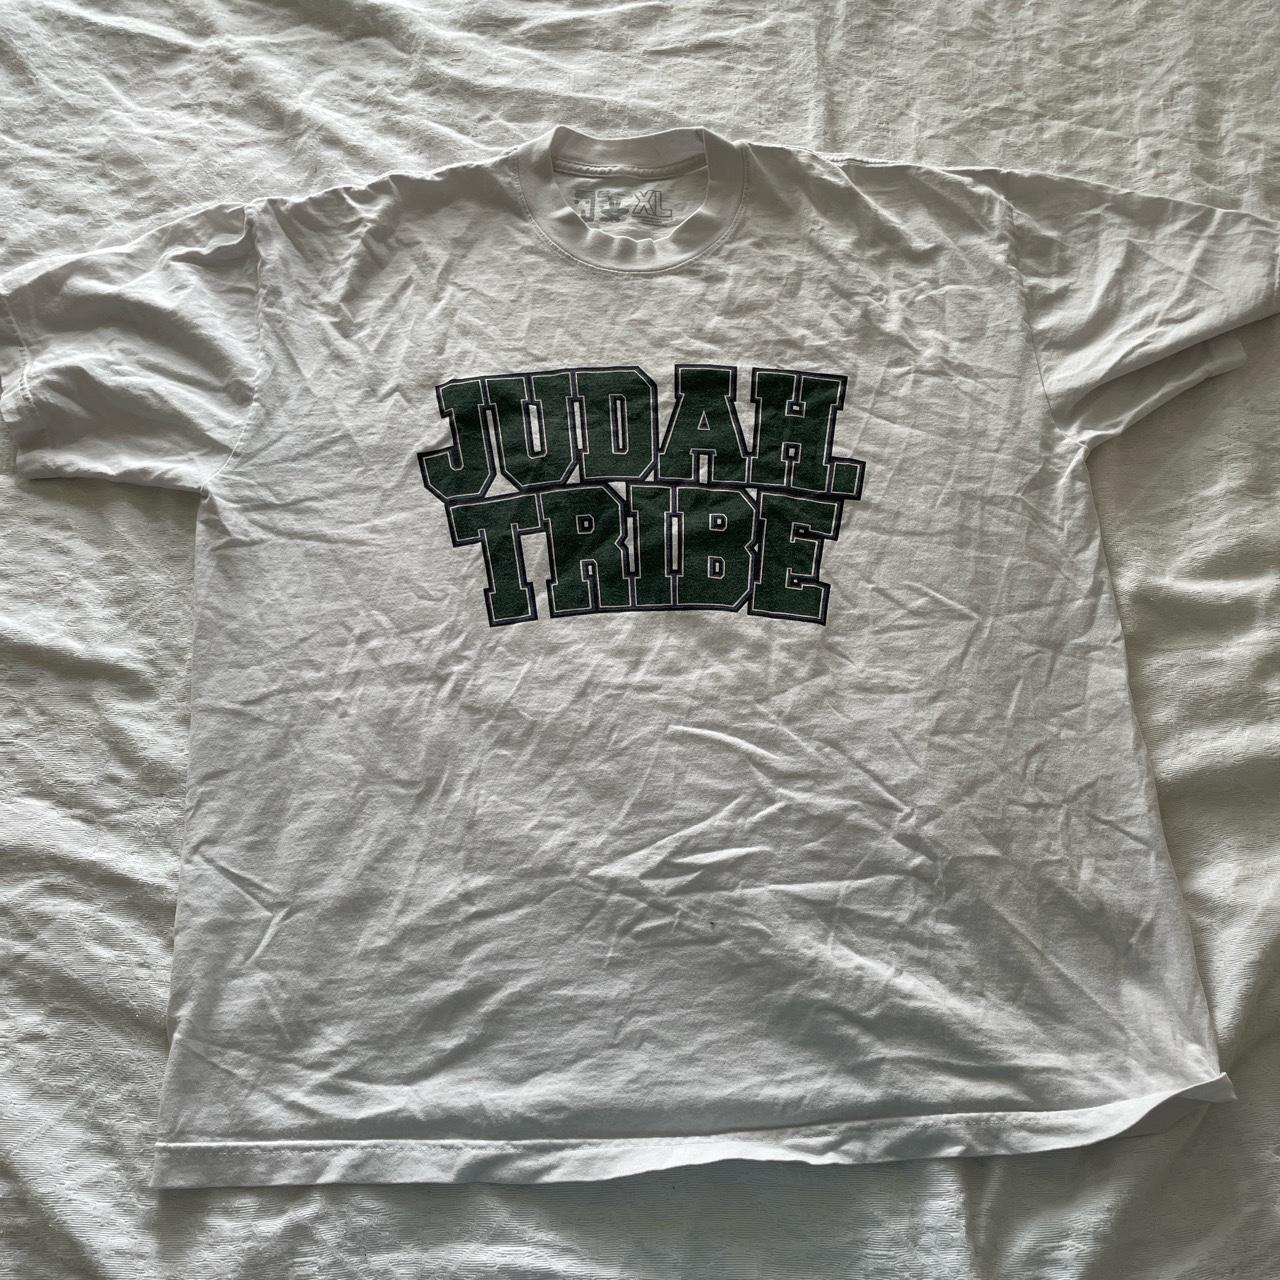 Judah Tribe T-shirt - Depop